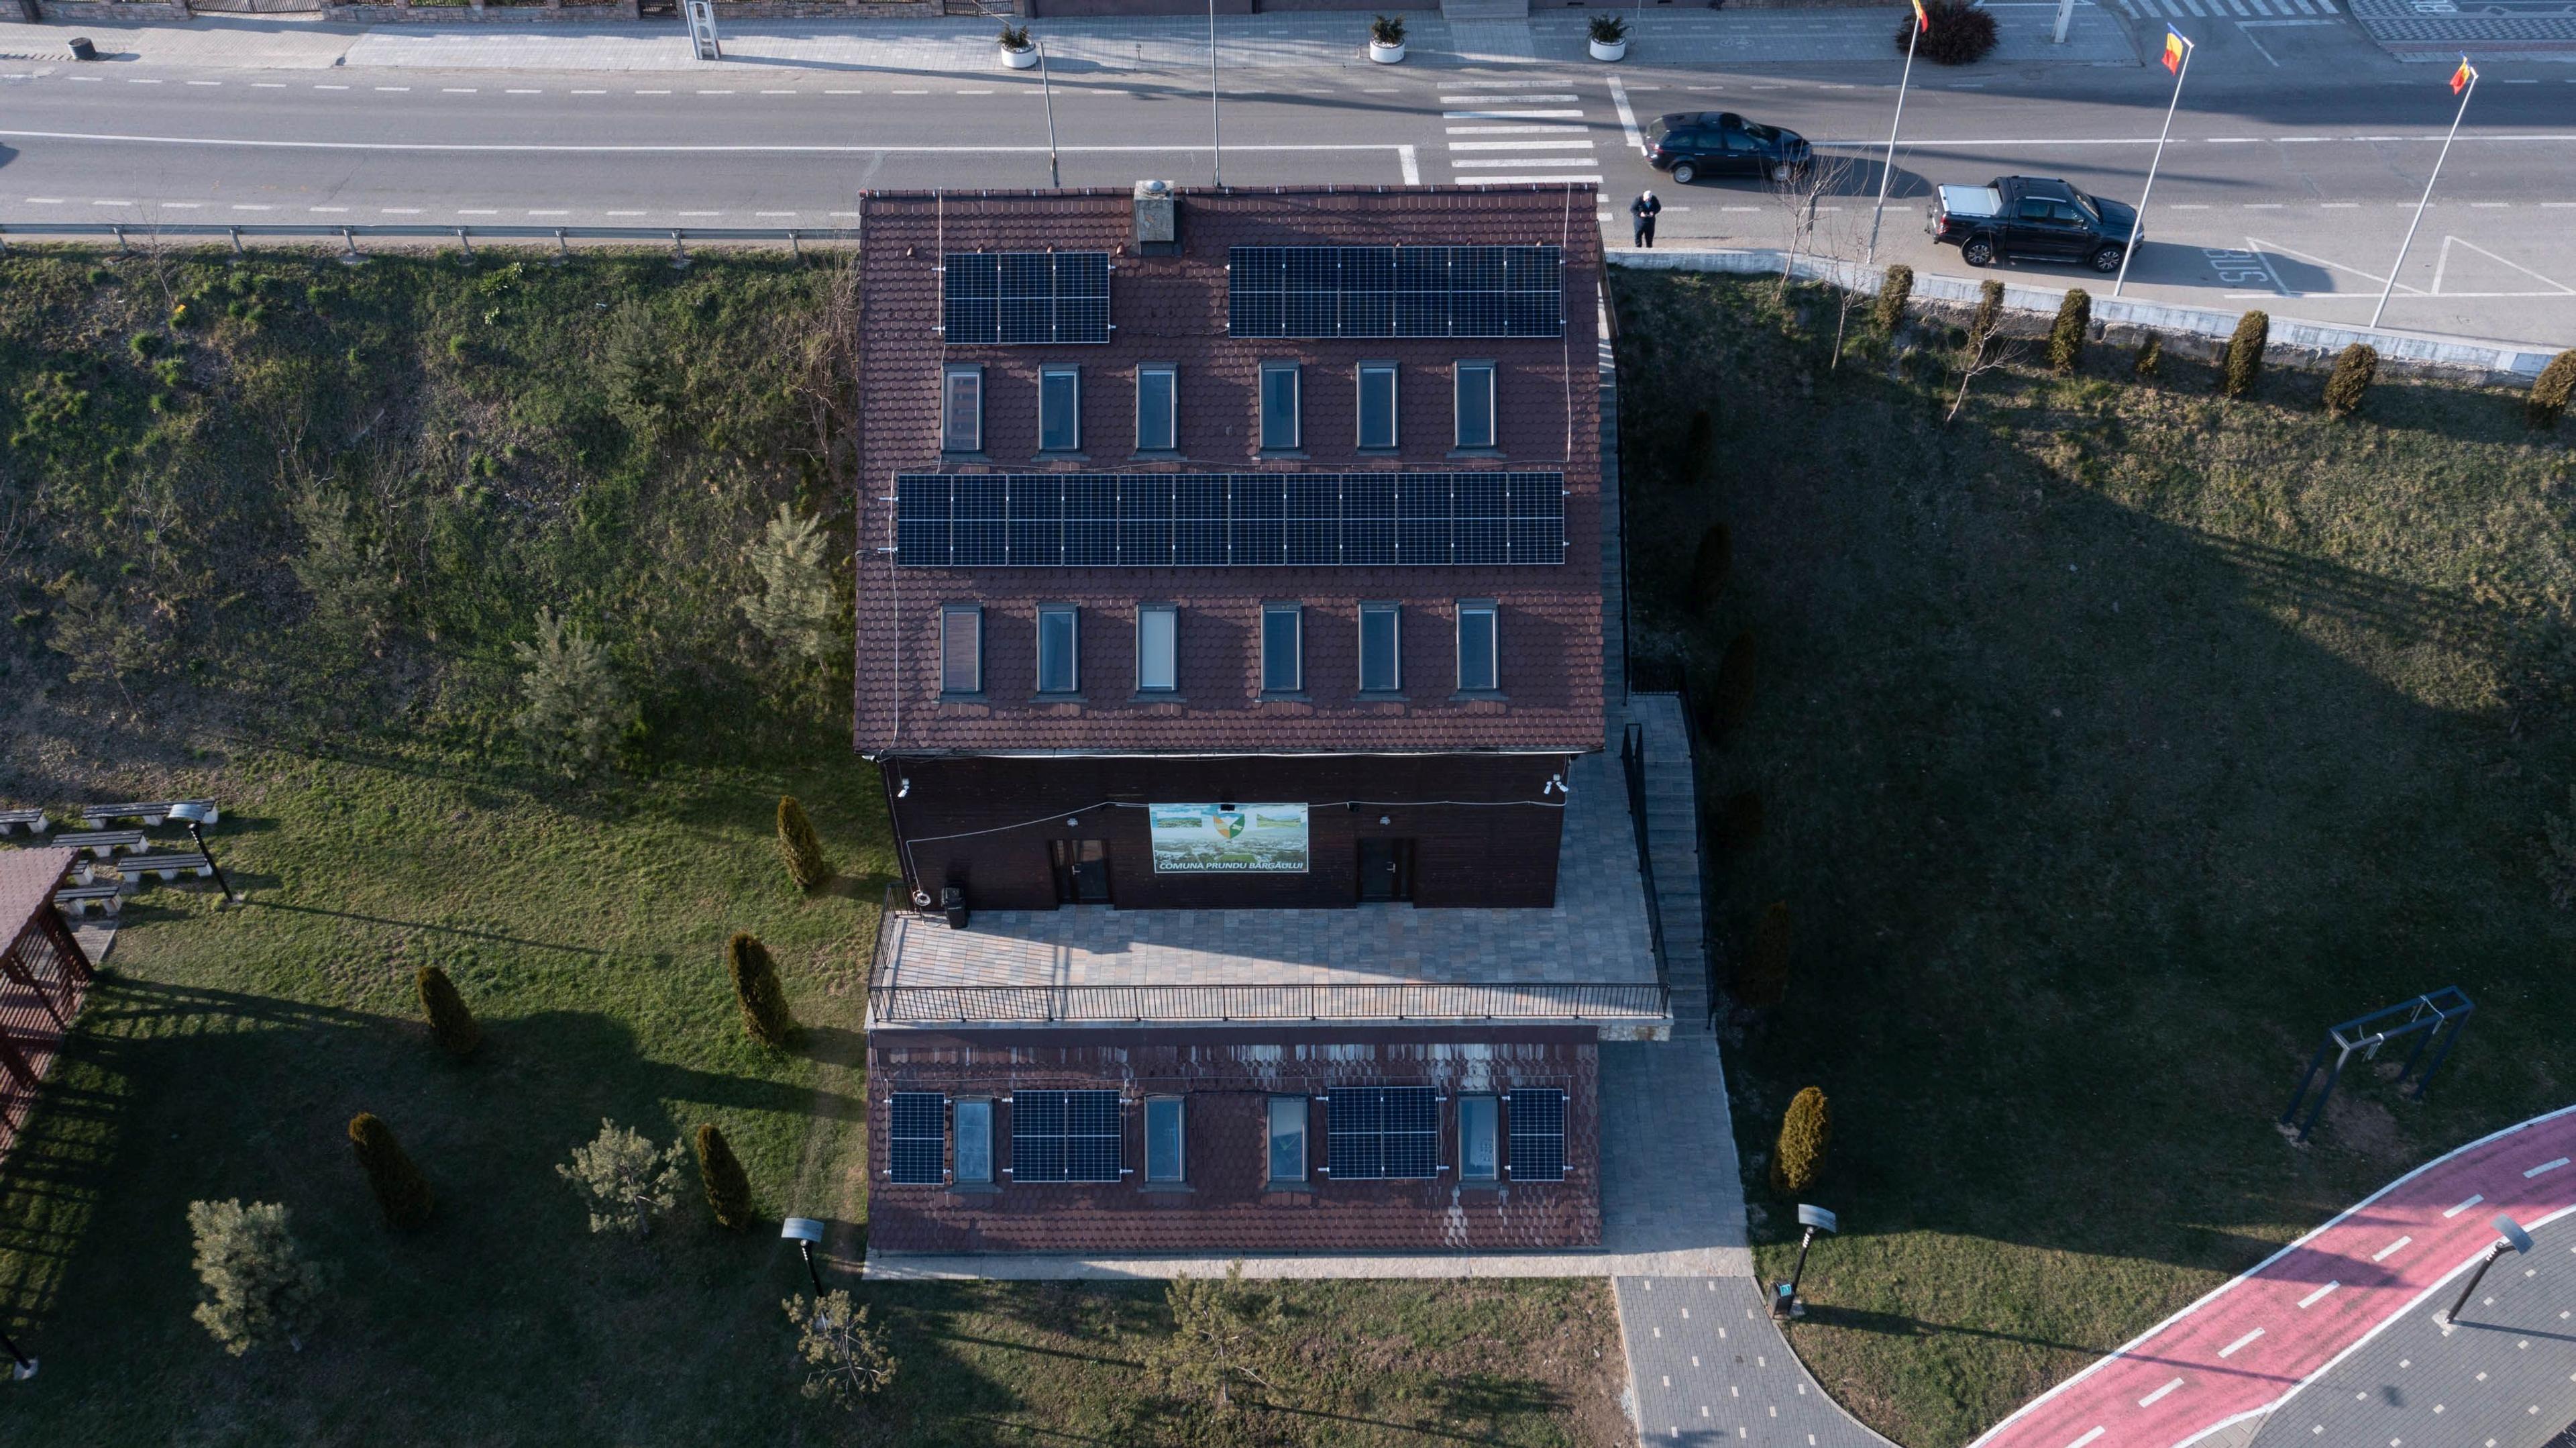 Centru Multifunctional with solar panels